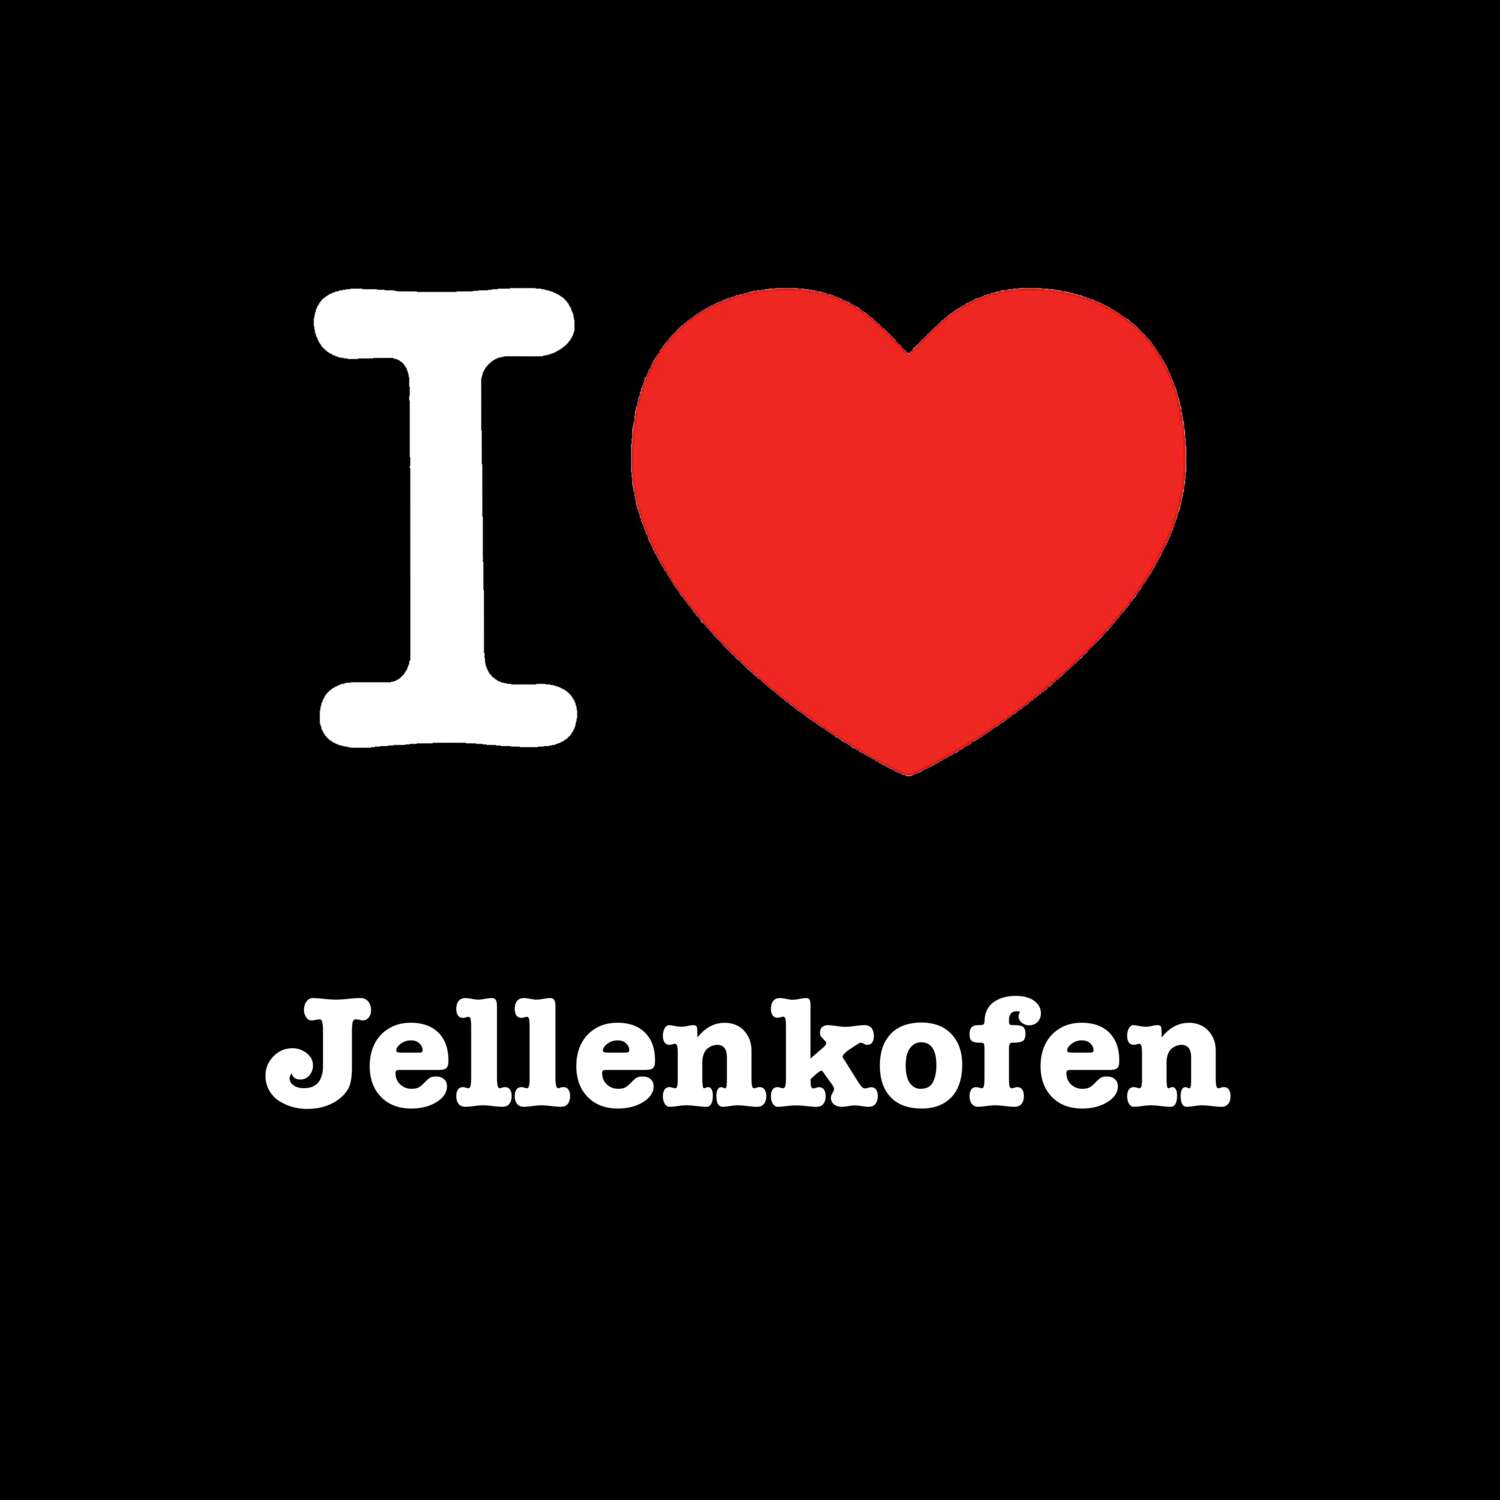 Jellenkofen T-Shirt »I love«